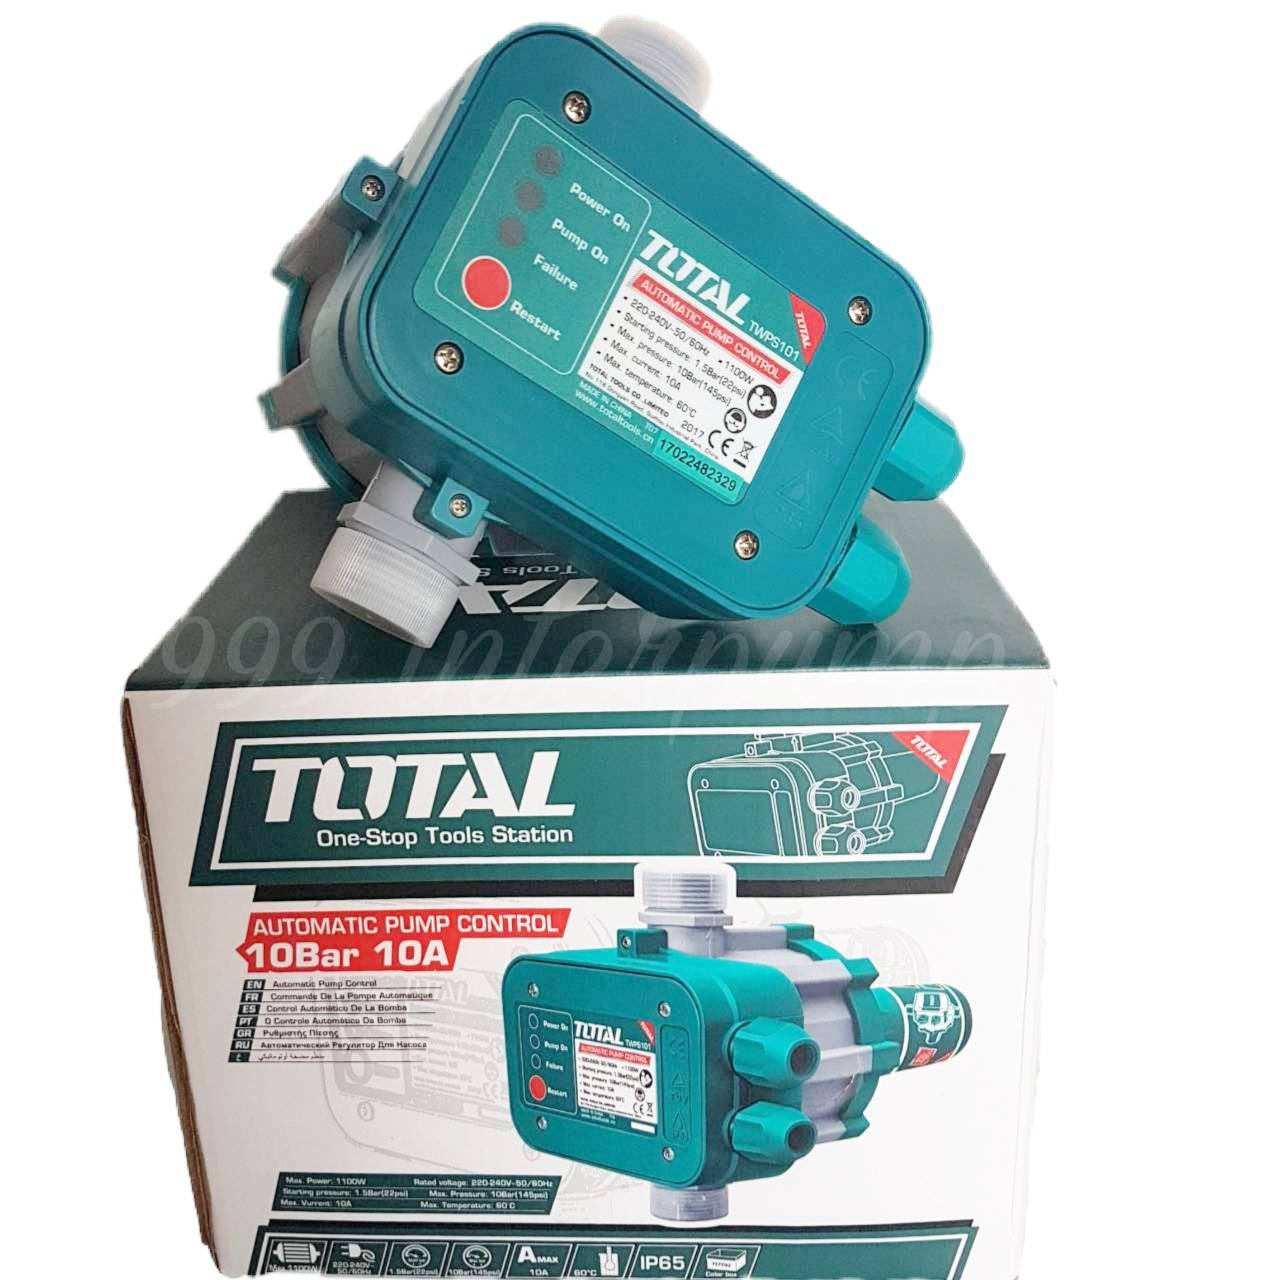 TOTAL TWPS101สวิทซ์ควบคุมปั๊มน้ำอัตโนมัติ อุปกรณ์ควบคุมแรงดันปั๊มน้ำแรงดันไฟฟ้า Automatic Pump Control  Pressure Control